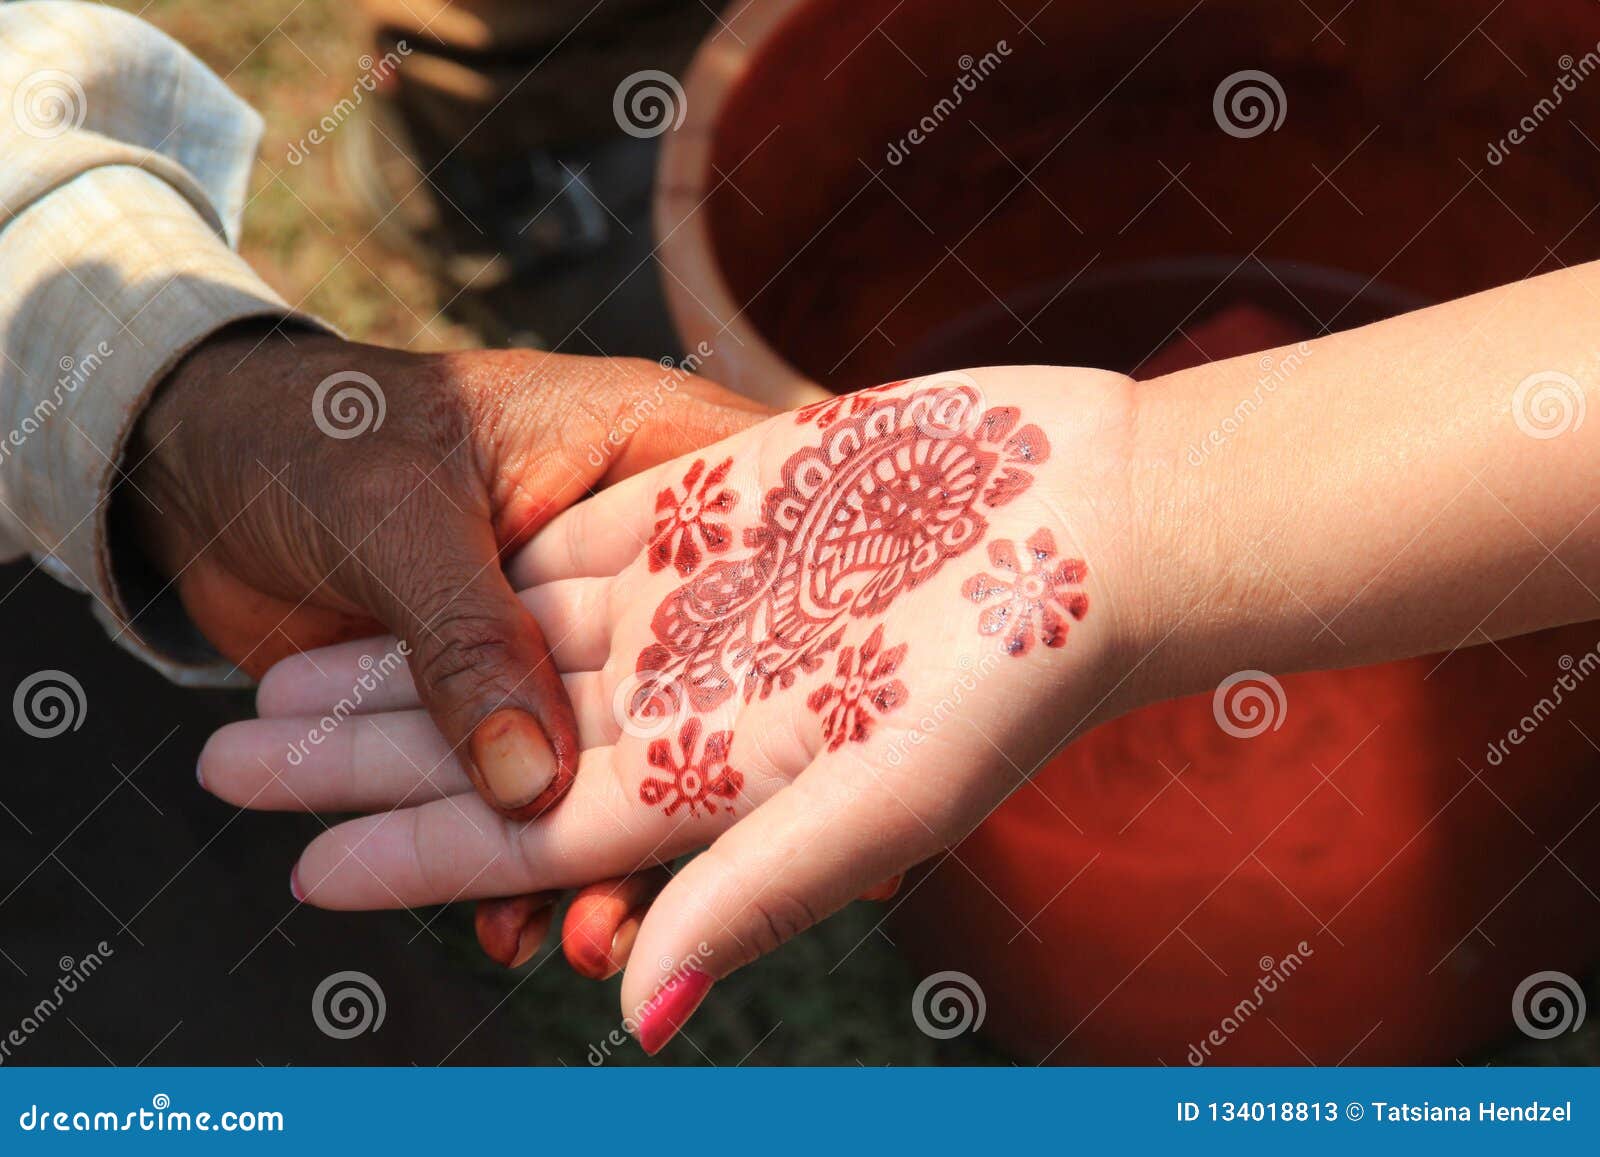 Discover more than 70 panama city beach henna tattoos  ineteachers